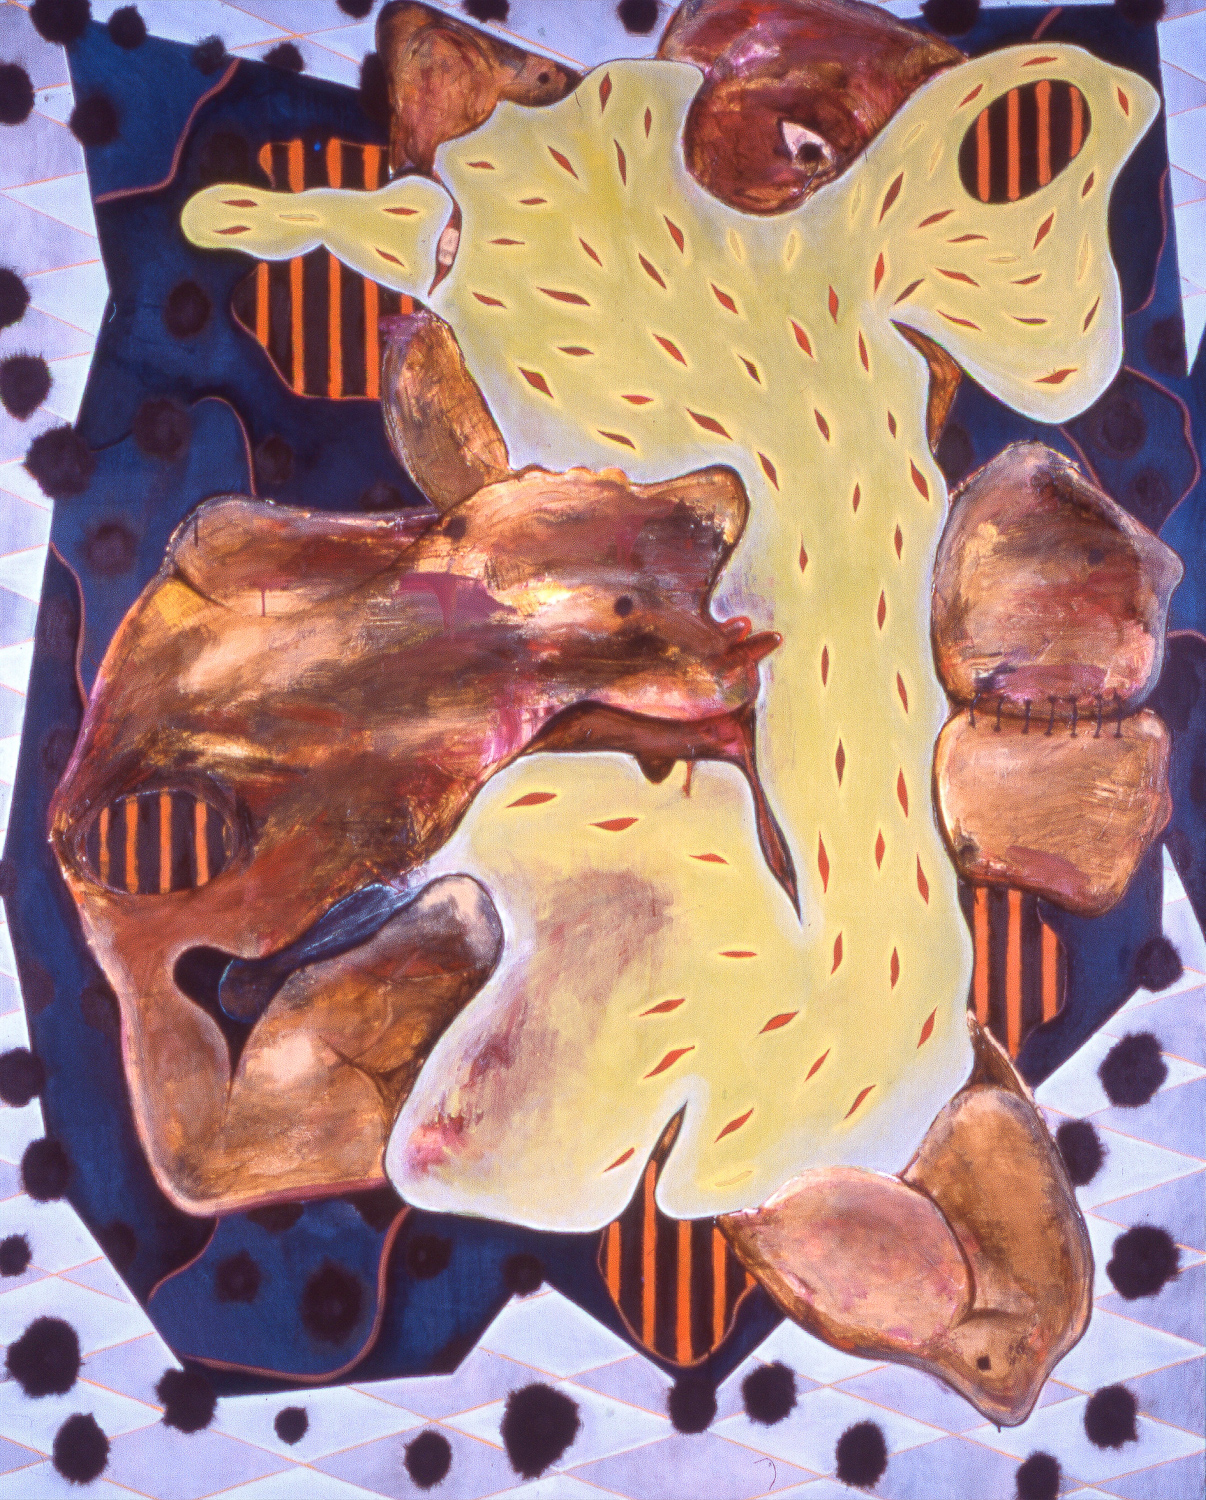    Psychosomatic #2 , 2002   Oil on canvas   92 x 74"  